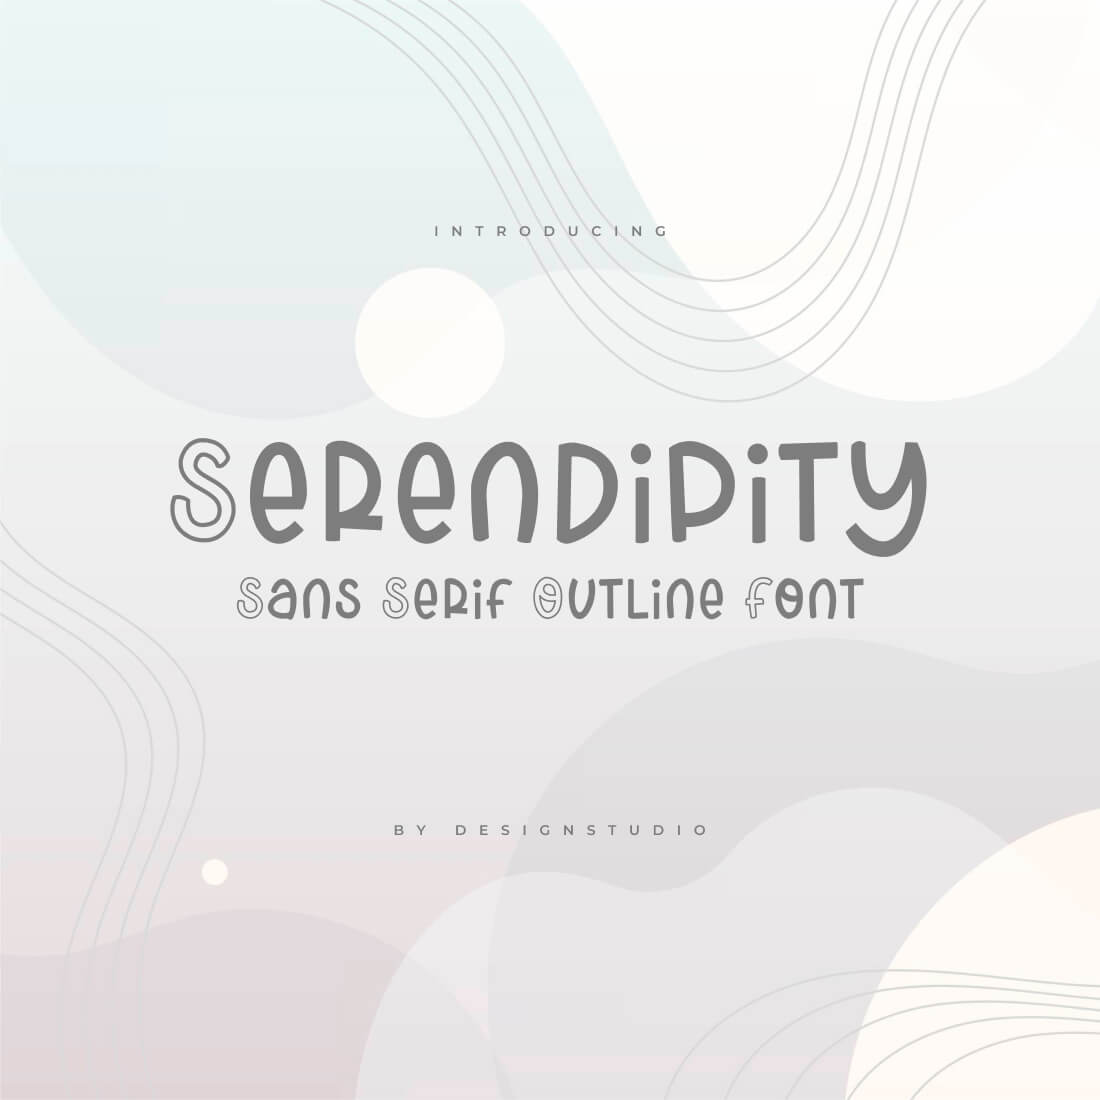 Serendipity Sans Serif Outline Font cover image.